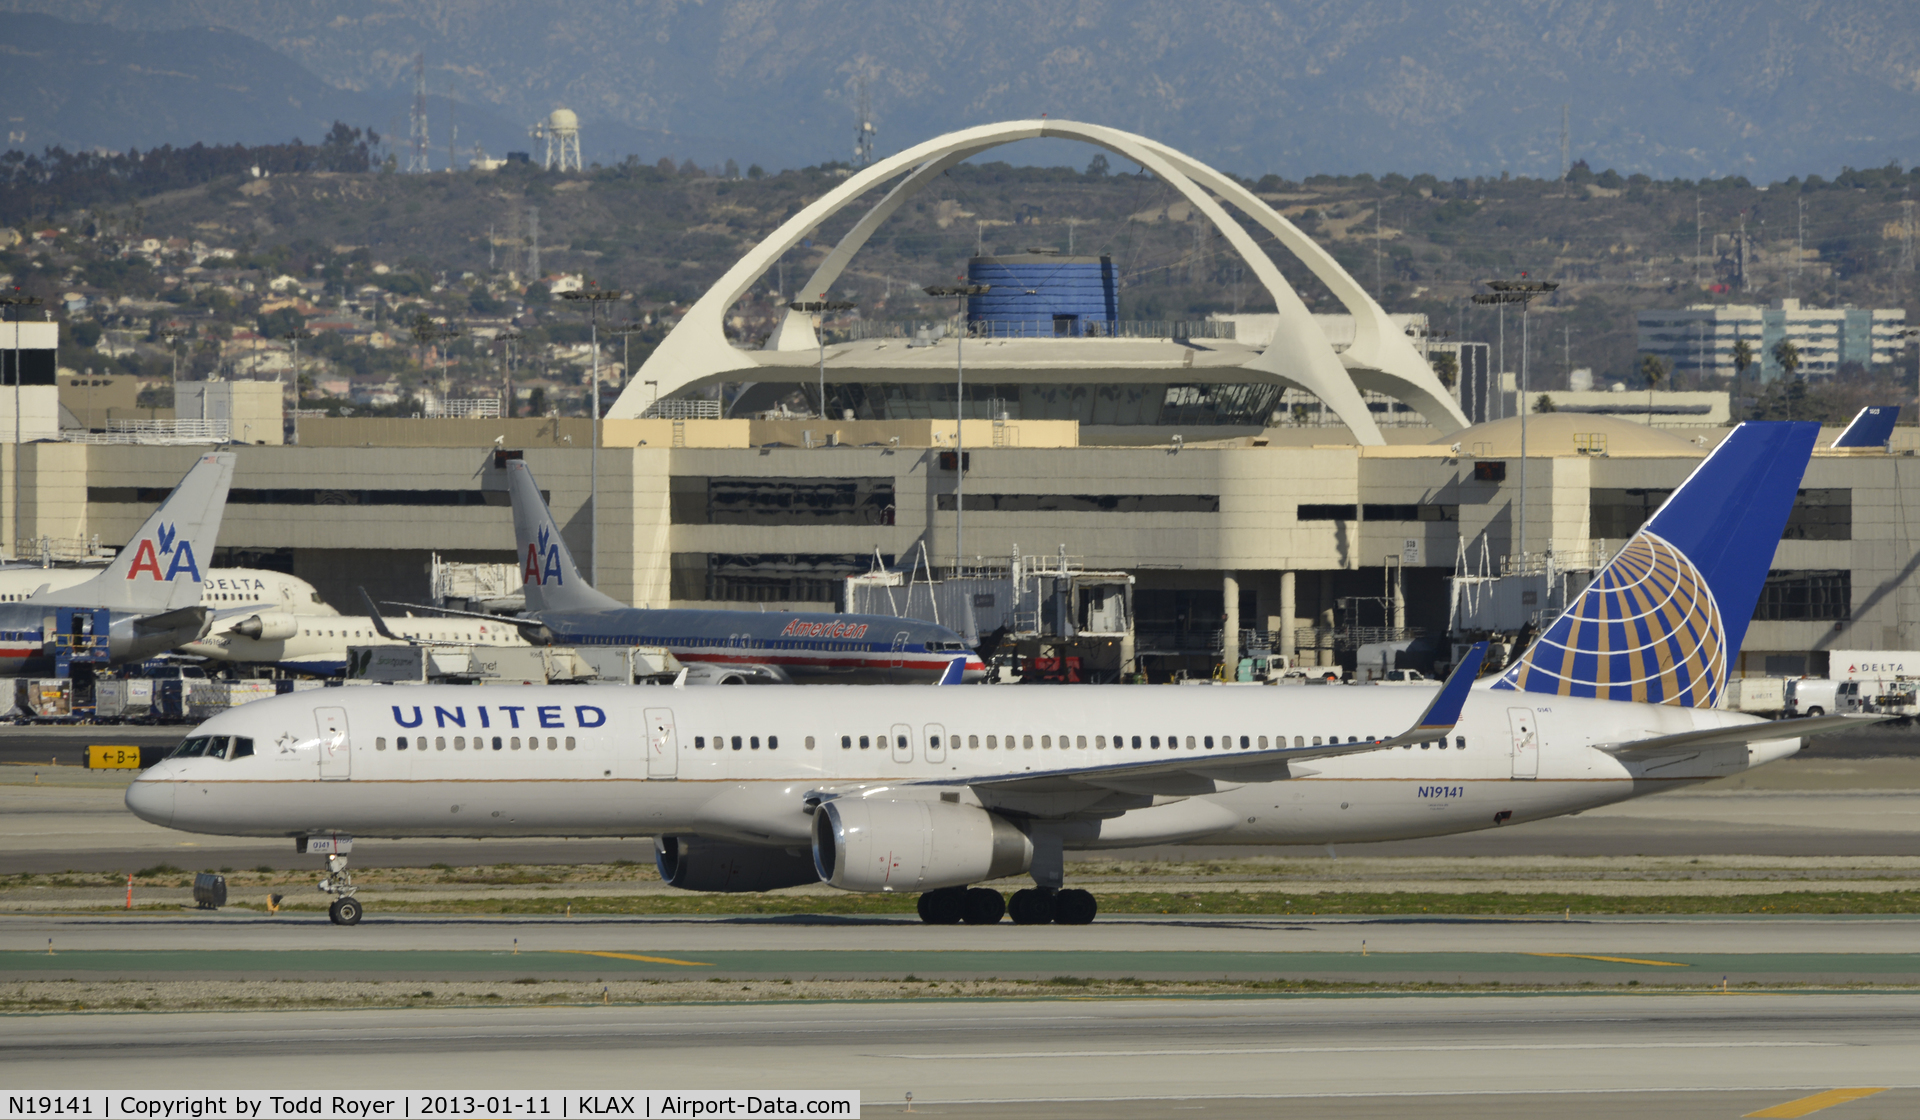 N19141, 2000 Boeing 757-224 C/N 30354, Arrived at LAX on 25L